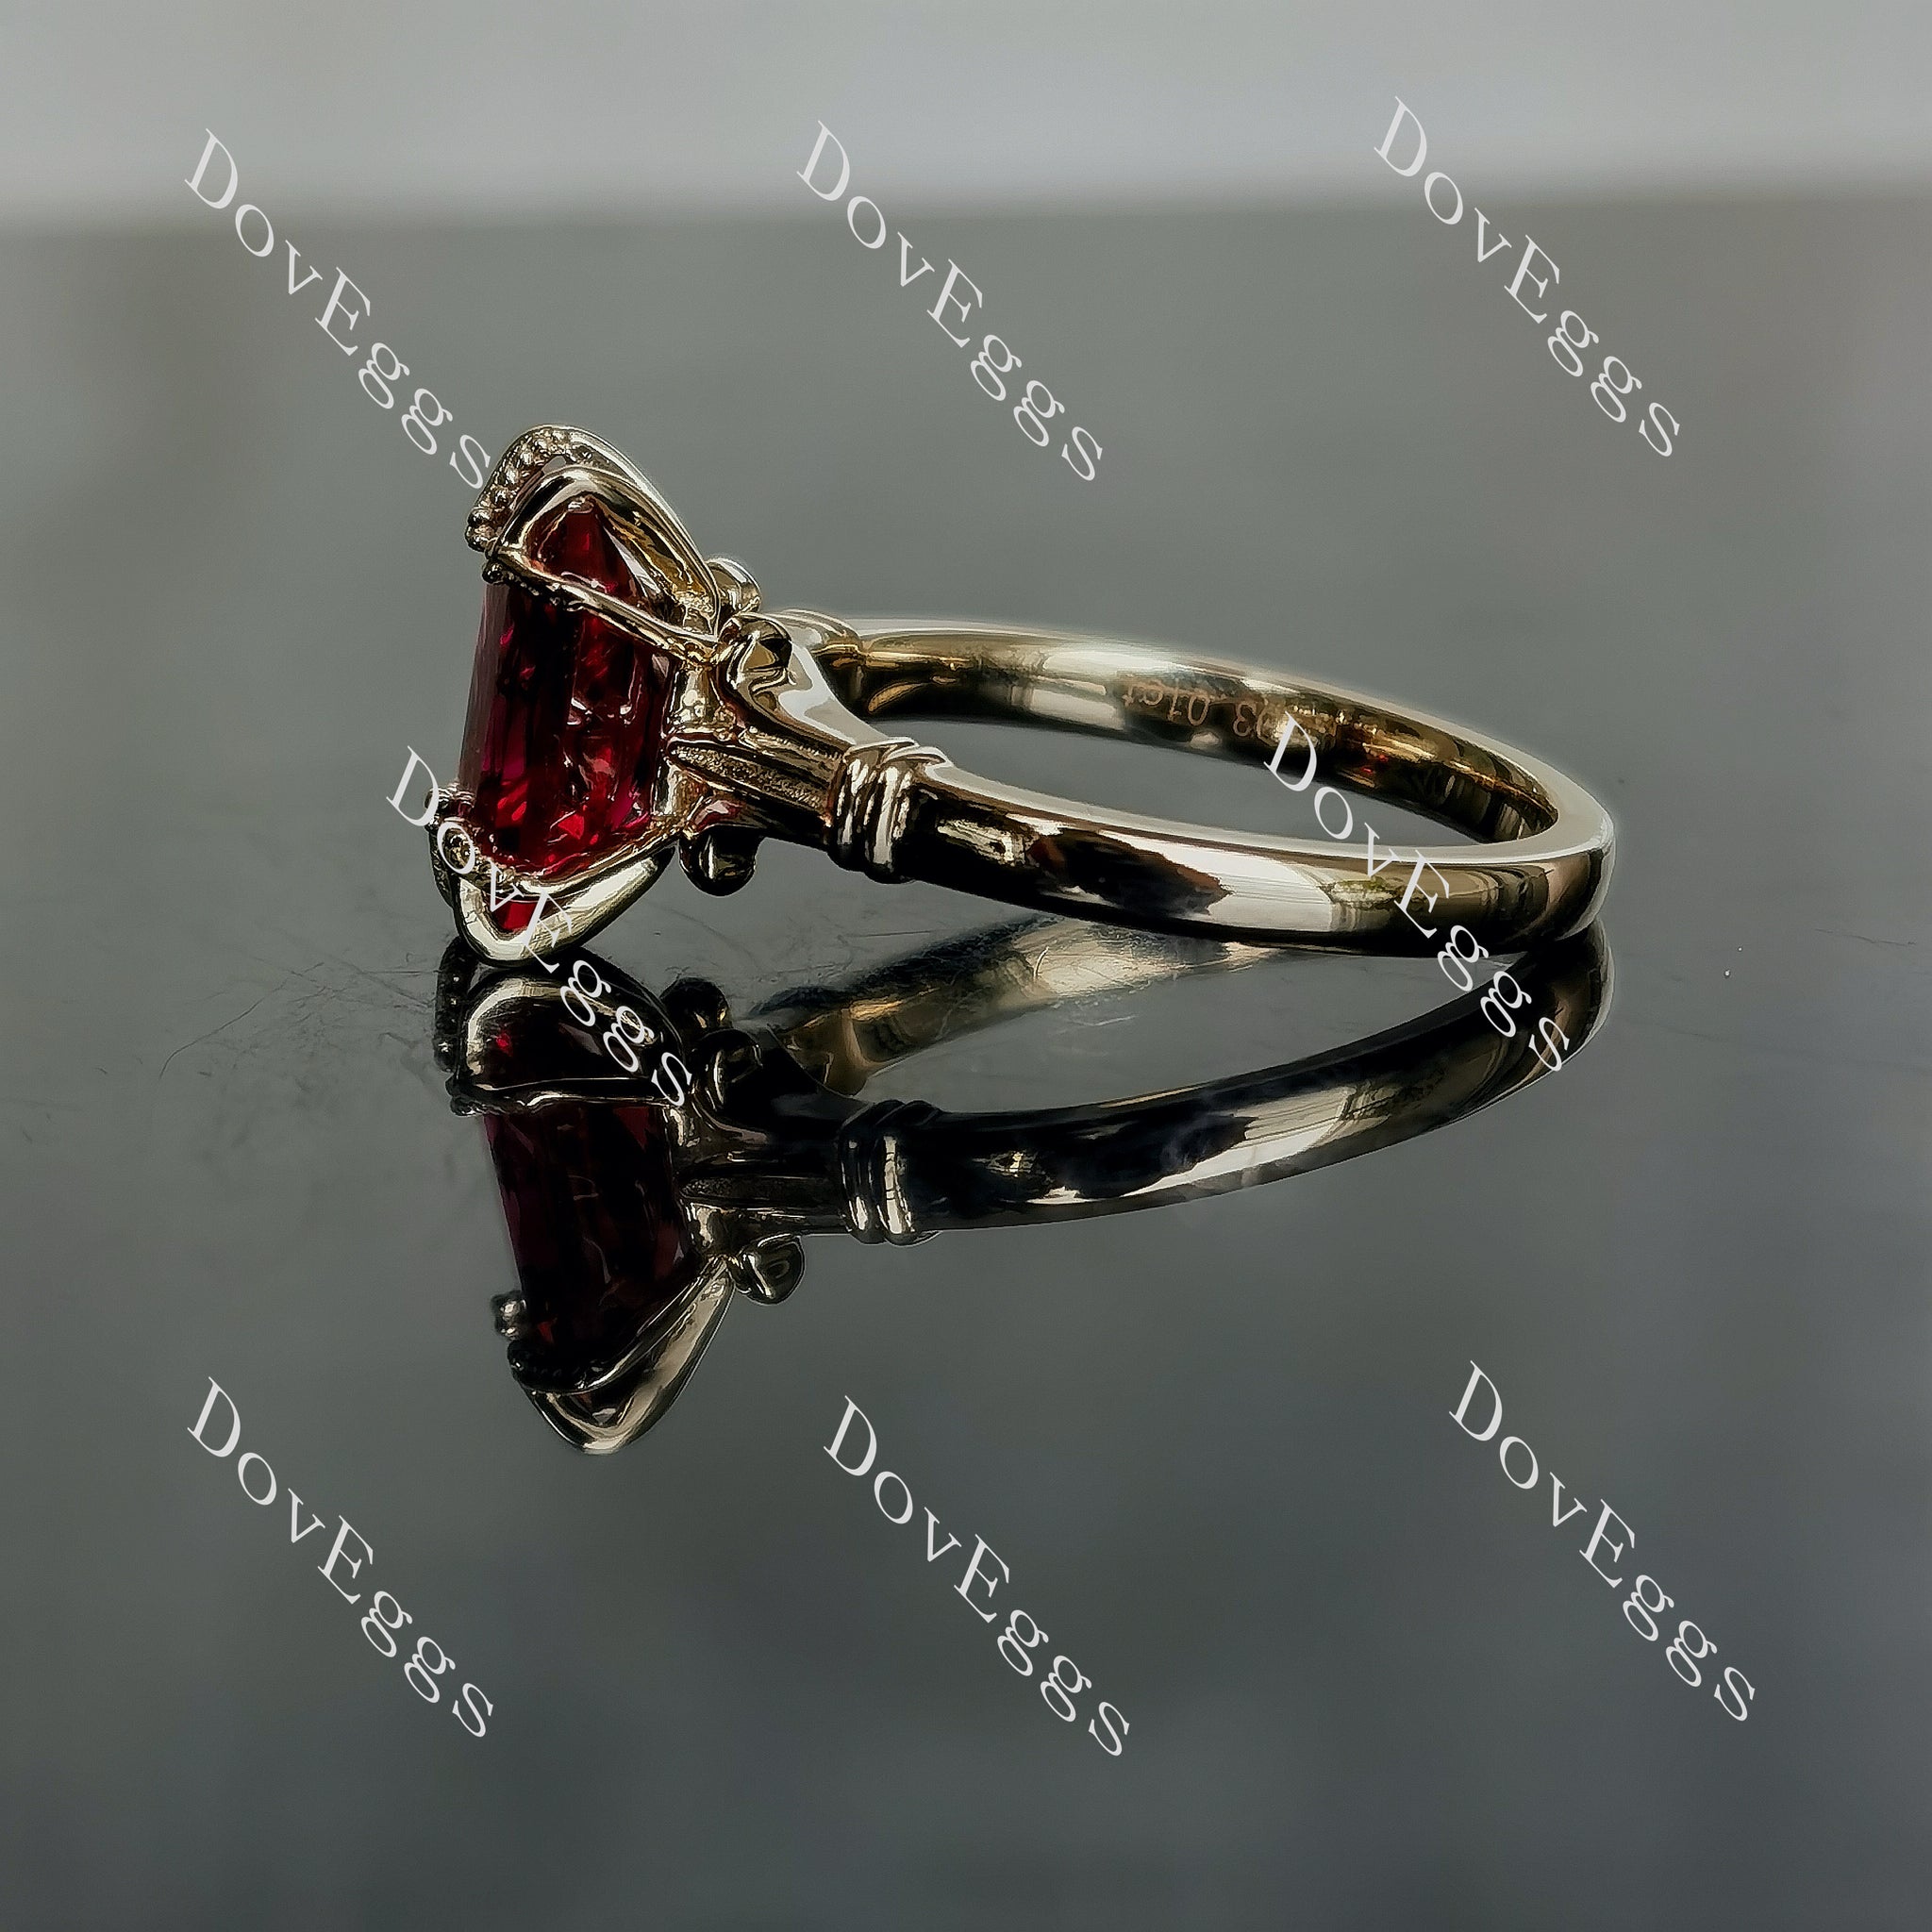 Doveggs radiant art deco solitaire colored gem engagement ring